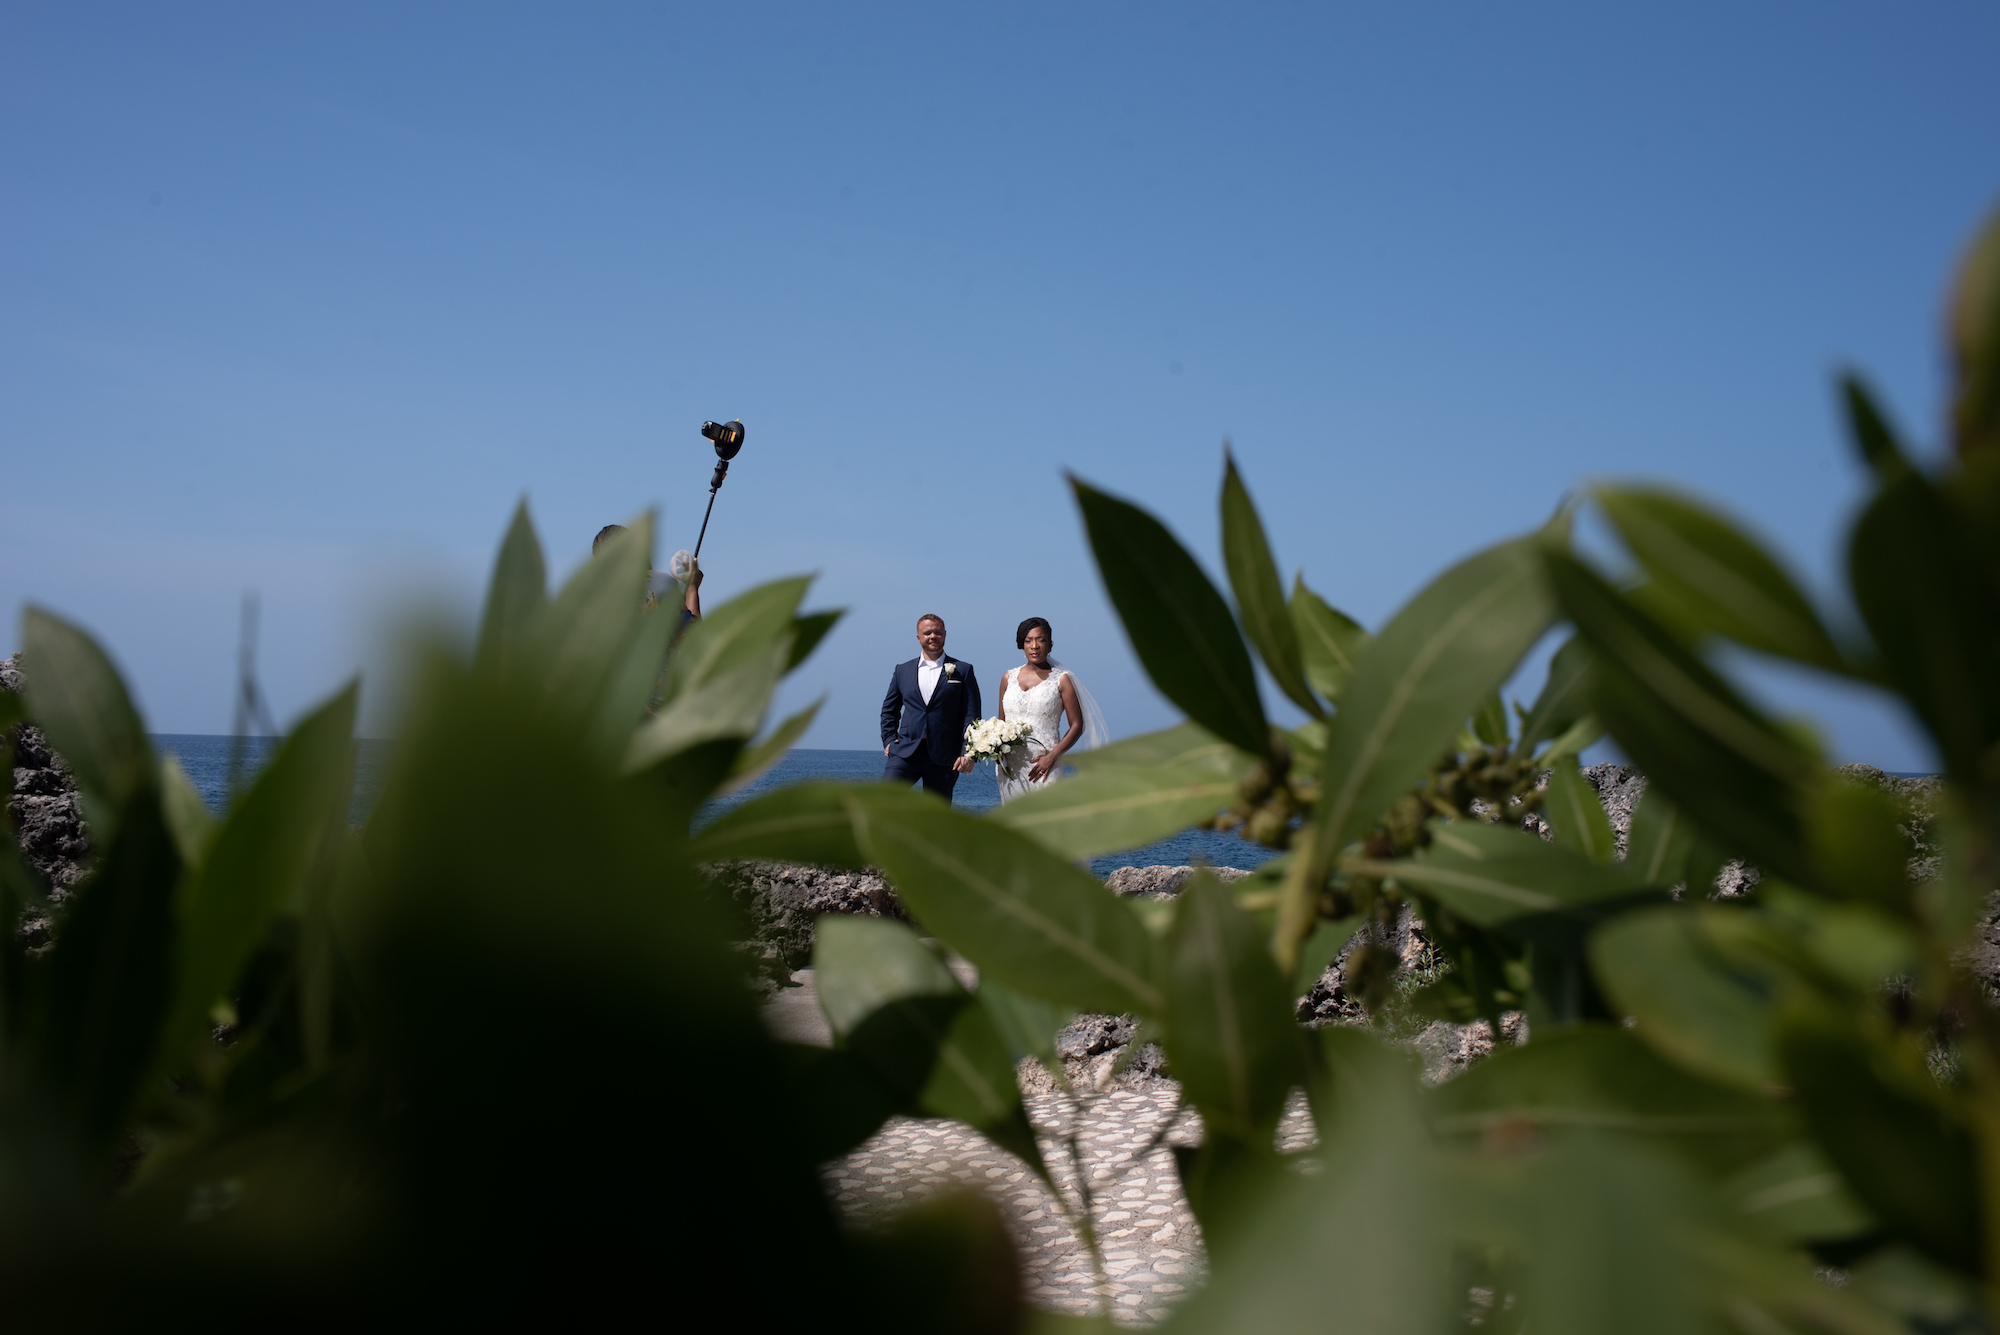 10 lyndah wells wedding photography visual flow presets